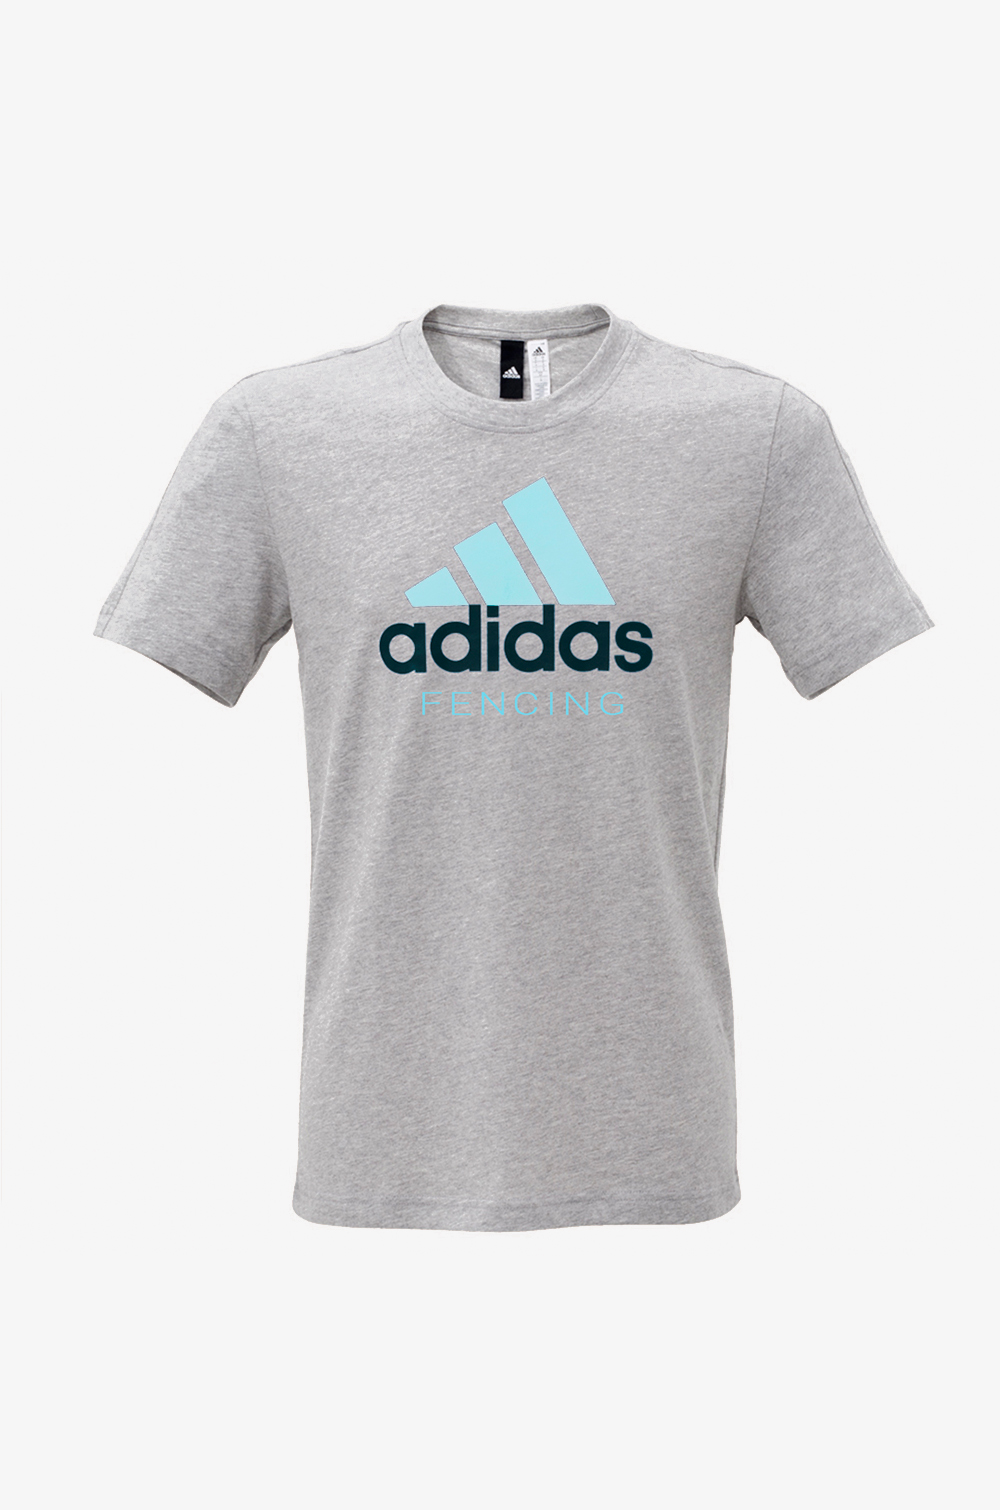 adidas T-shirt Herren (hellblau)